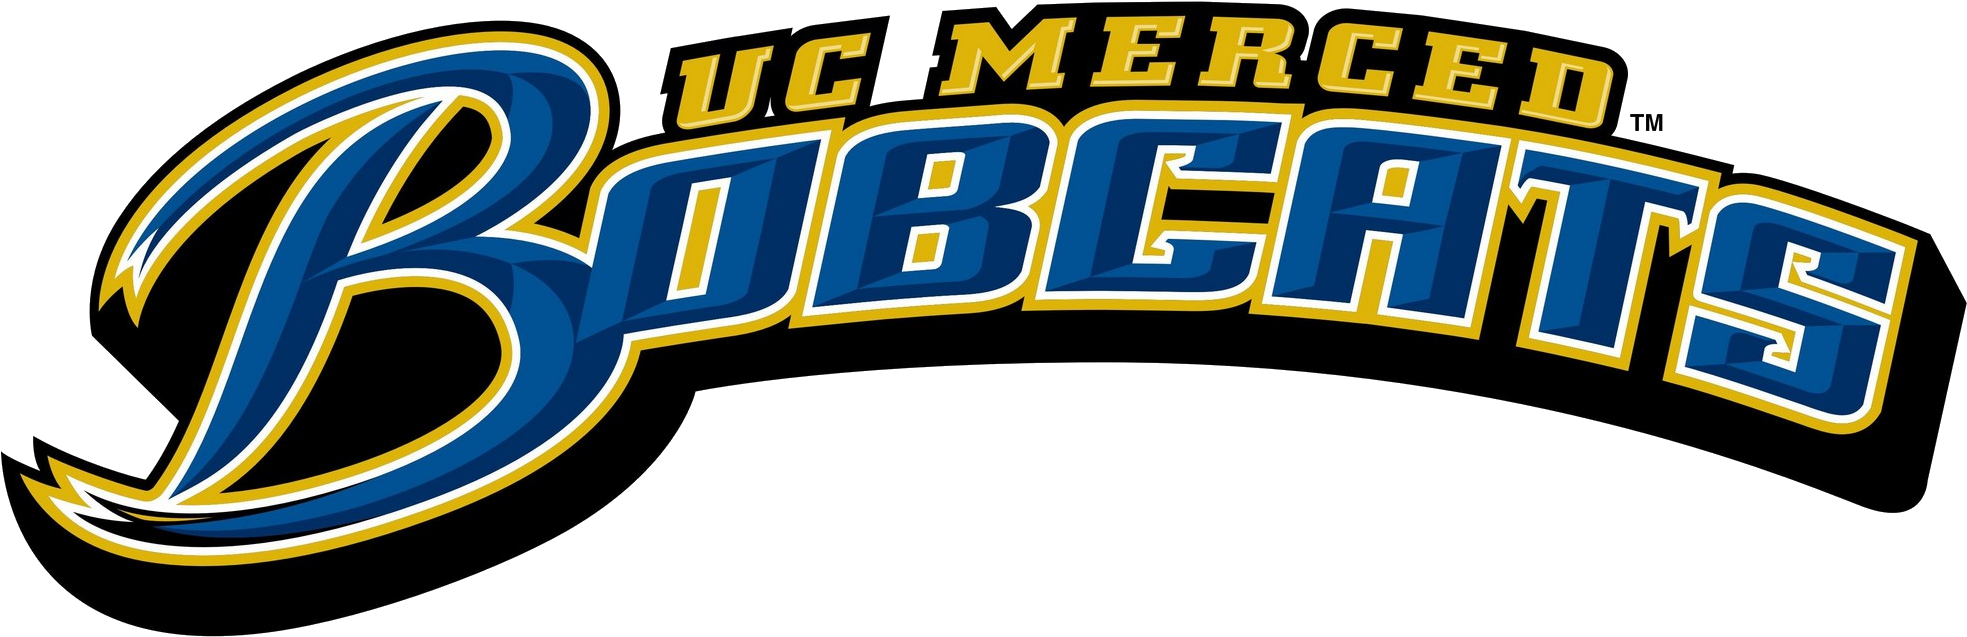 Uc Merced Bobcats Logo1 - University Of California, Merced (2100x720)